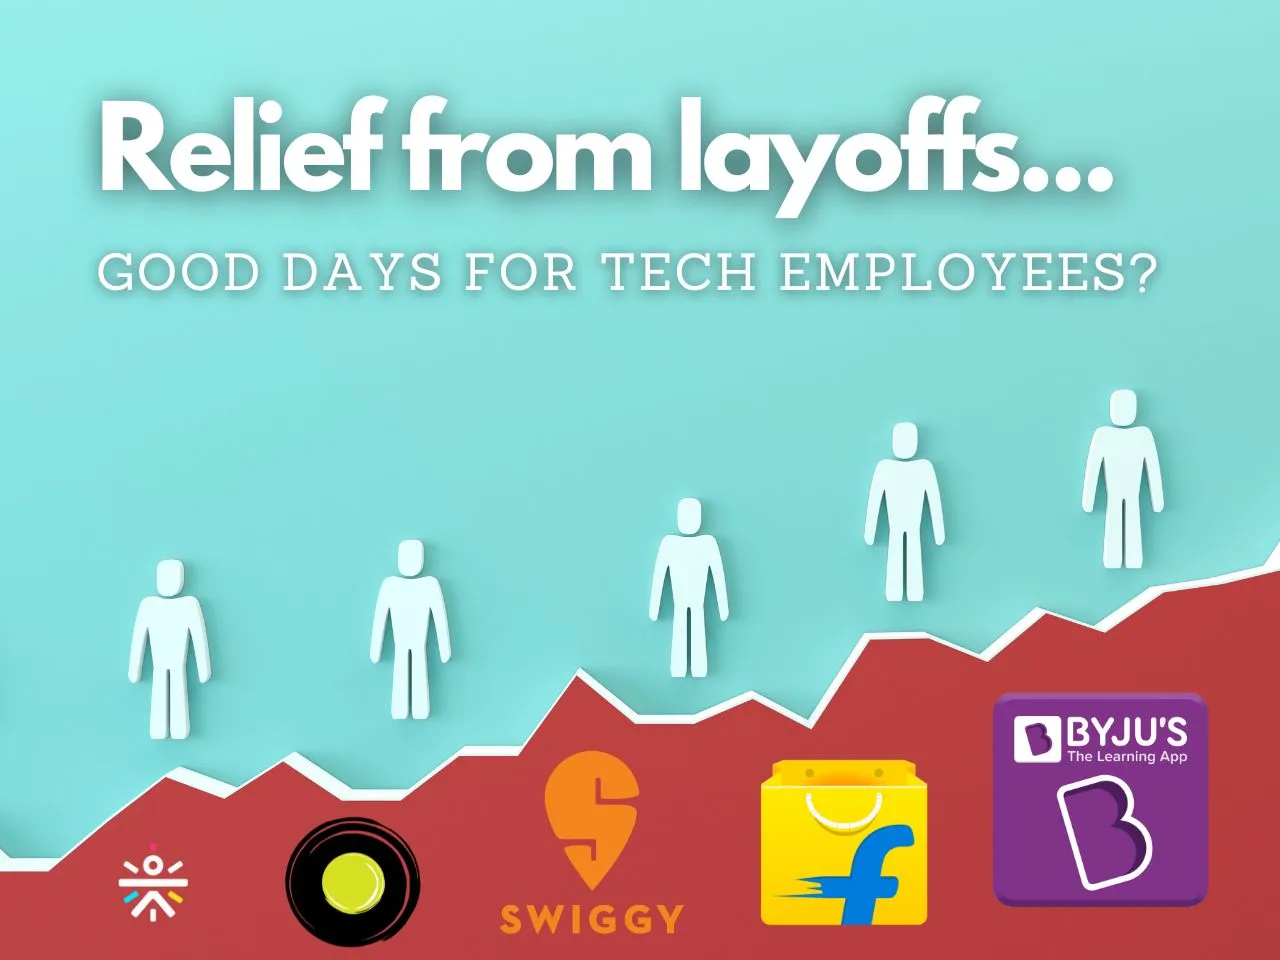 Good News For Tech Employees! Finally A Decline In Layoffs